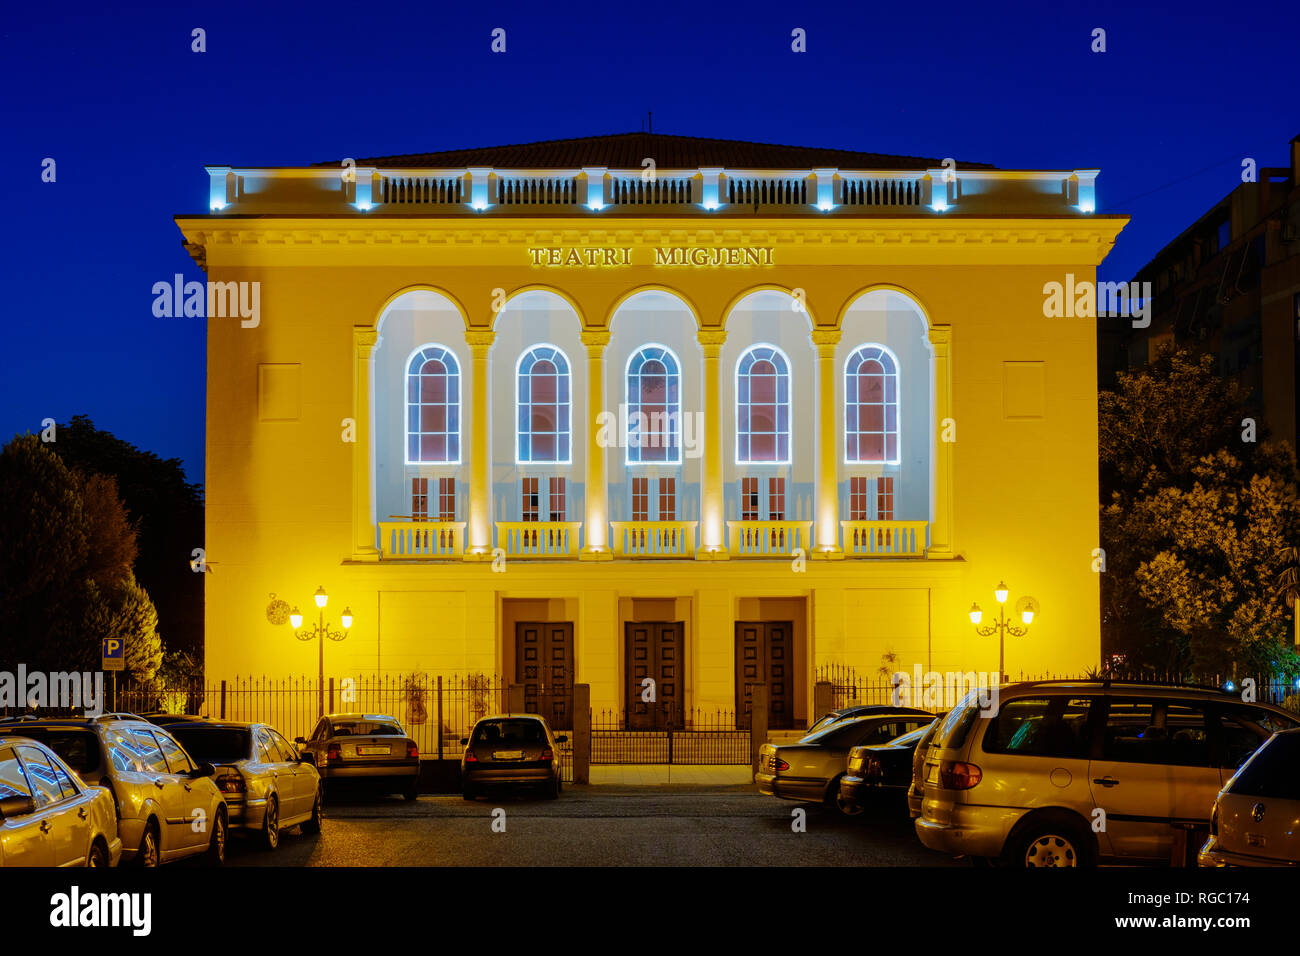 Albanien, Shkodra, migjeni Theater an der blauen Stunde Stockfoto